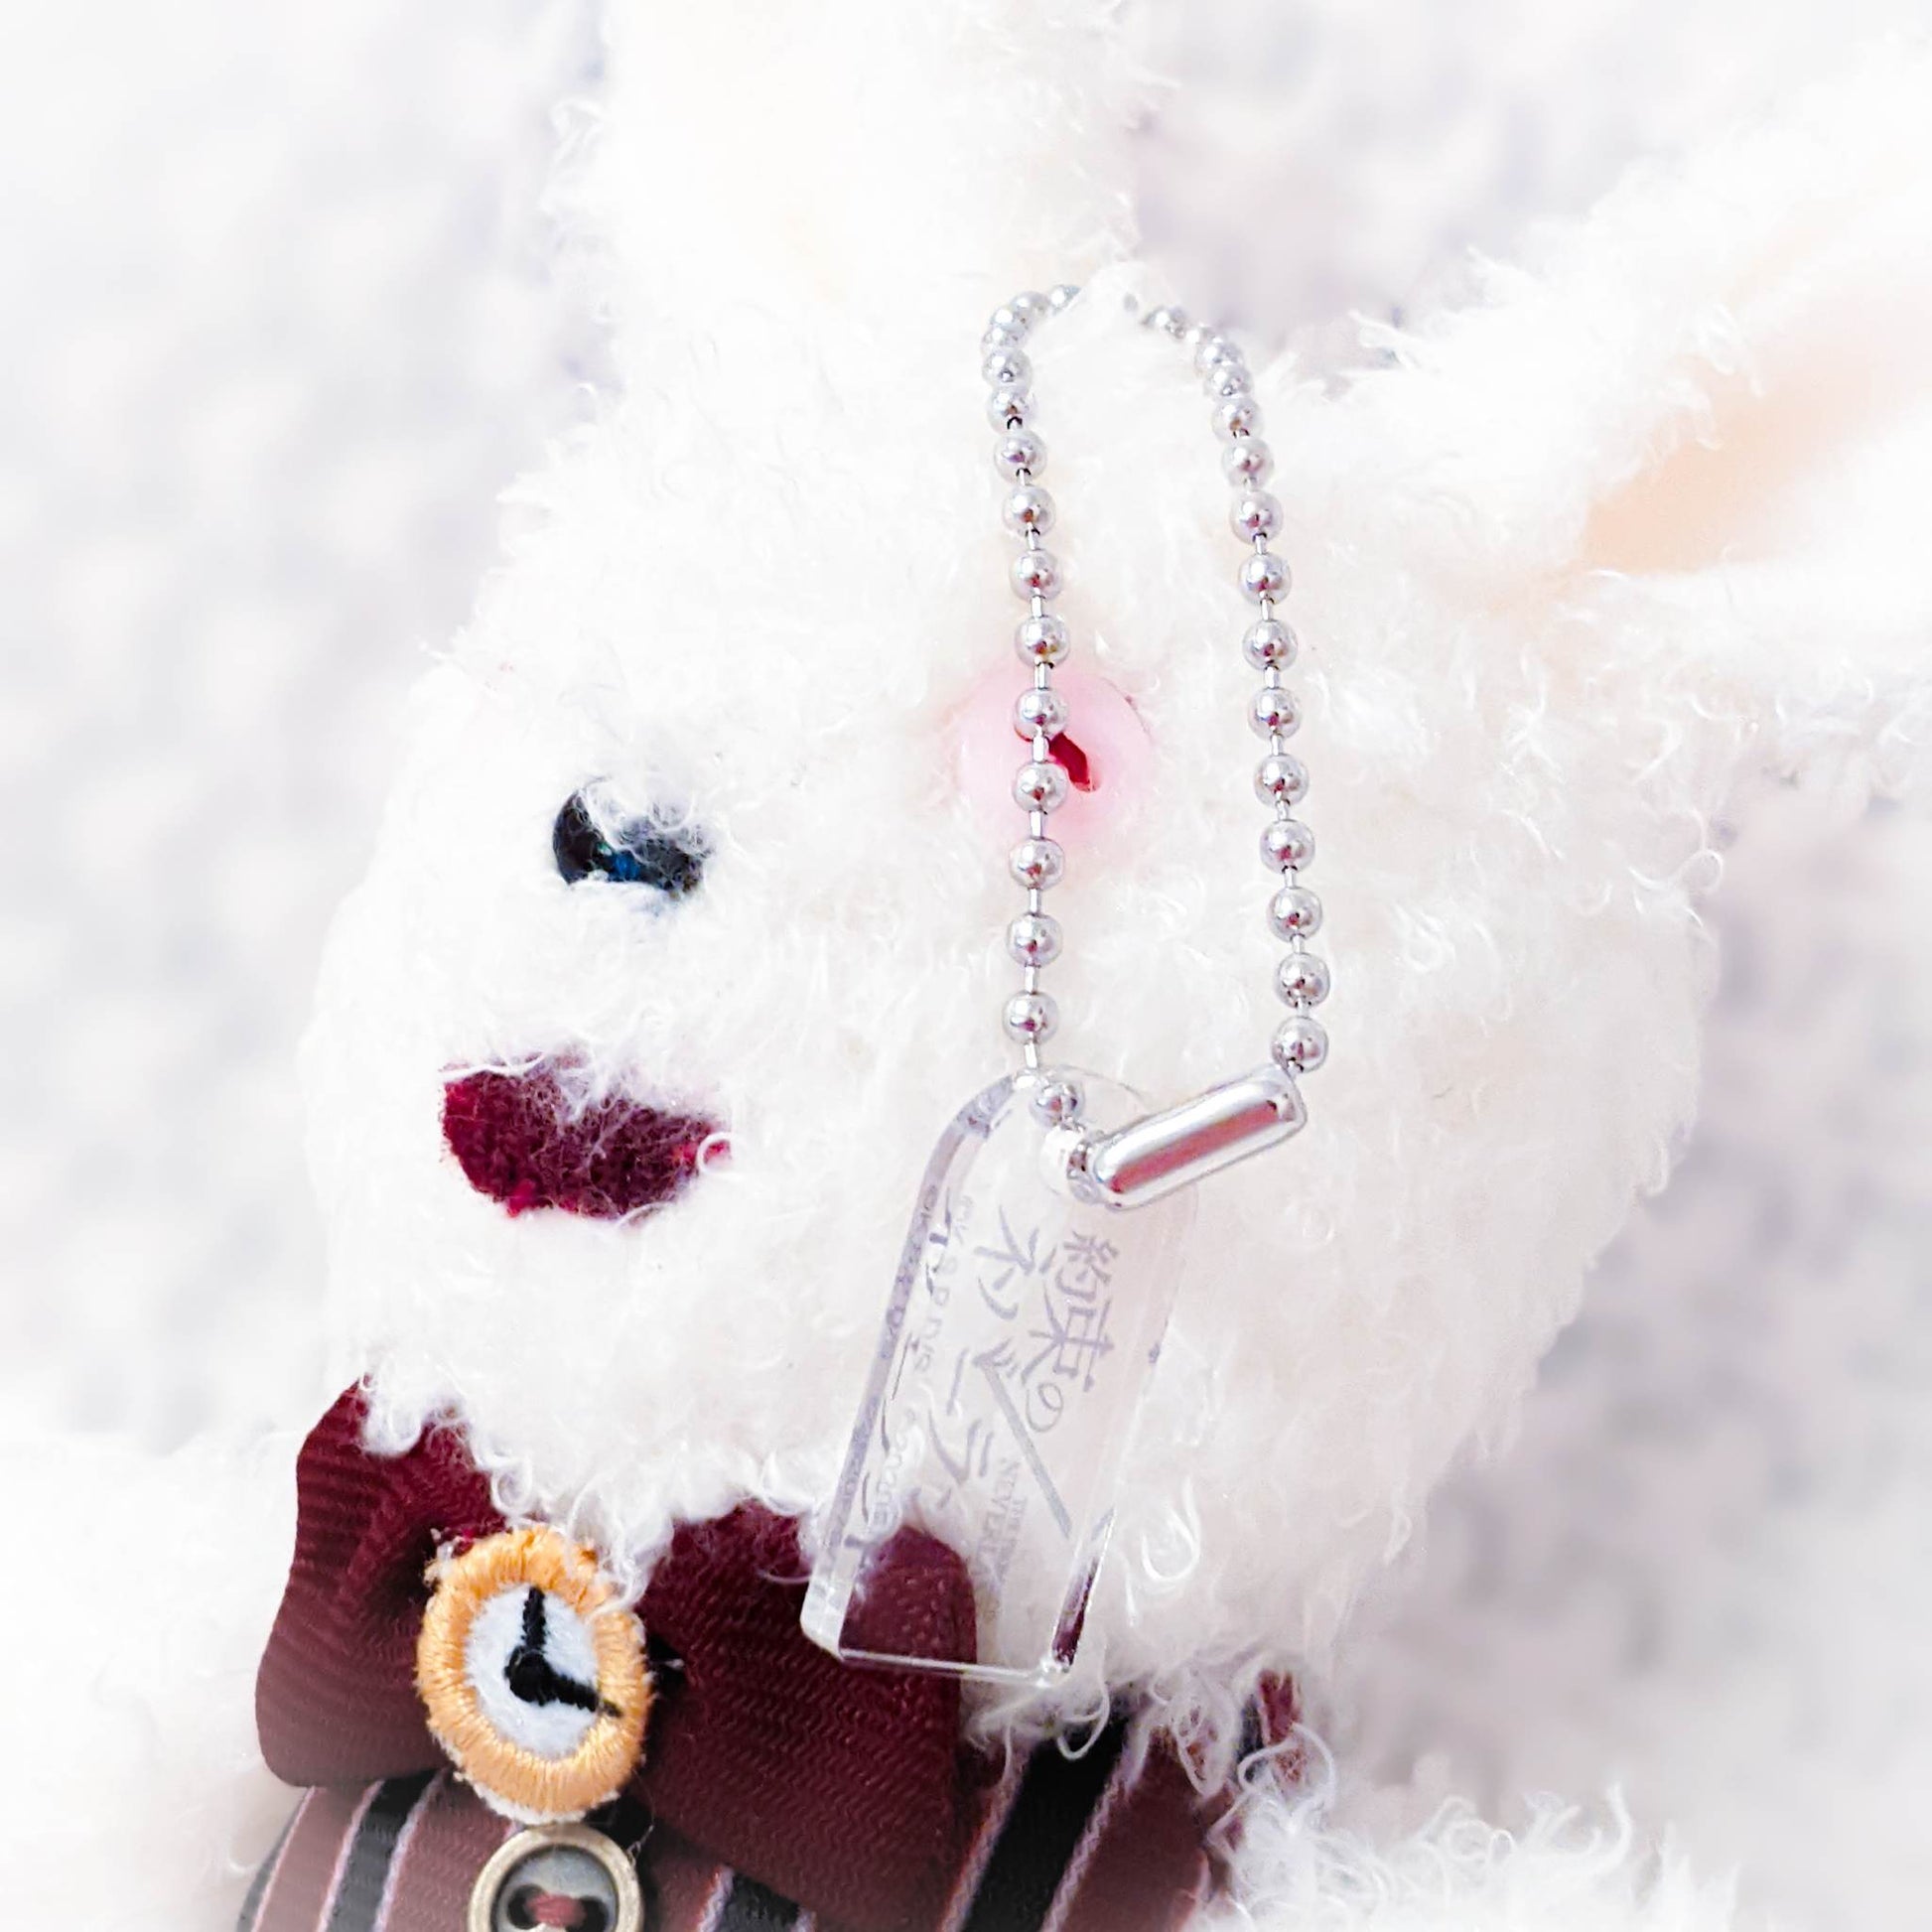 The Promised Neverland Anime Mini Mascot Cute Toy Plush Keychain